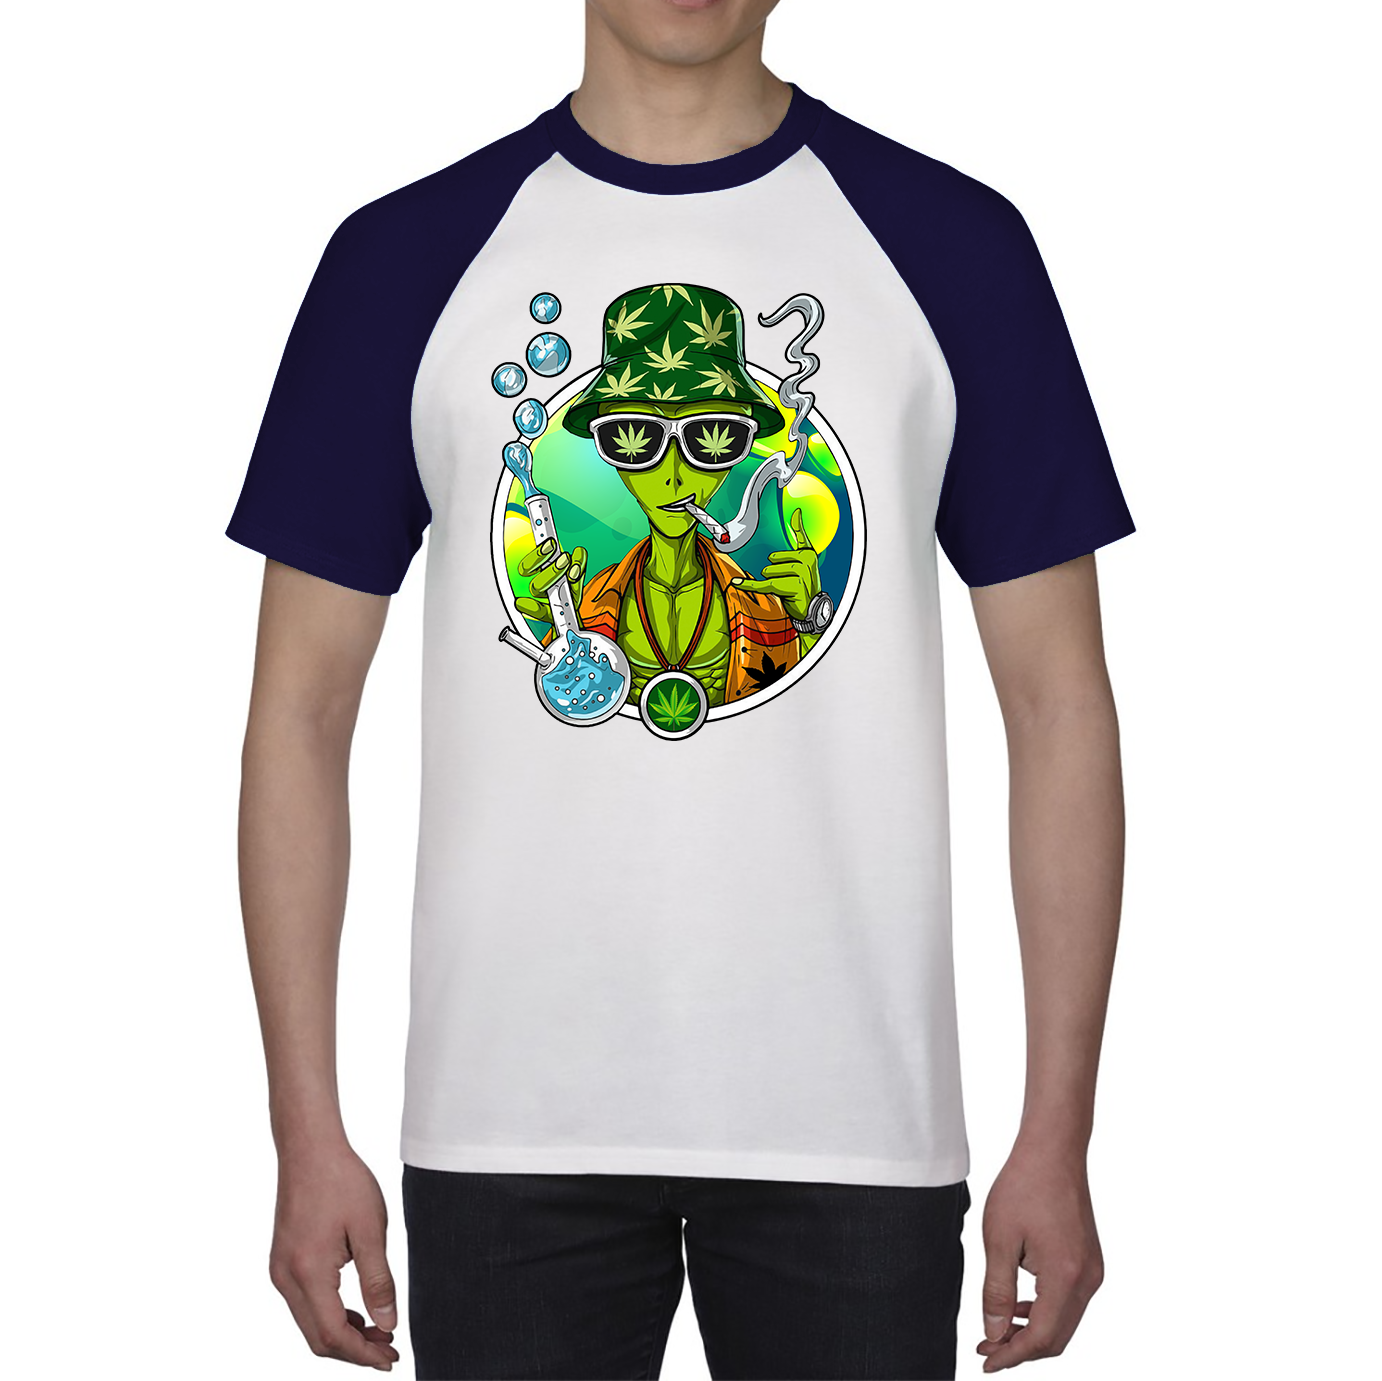 Weed Alien Stoner Shirt Marijuana, Cannabis Lovers Funny Joke Baseball T Shirt